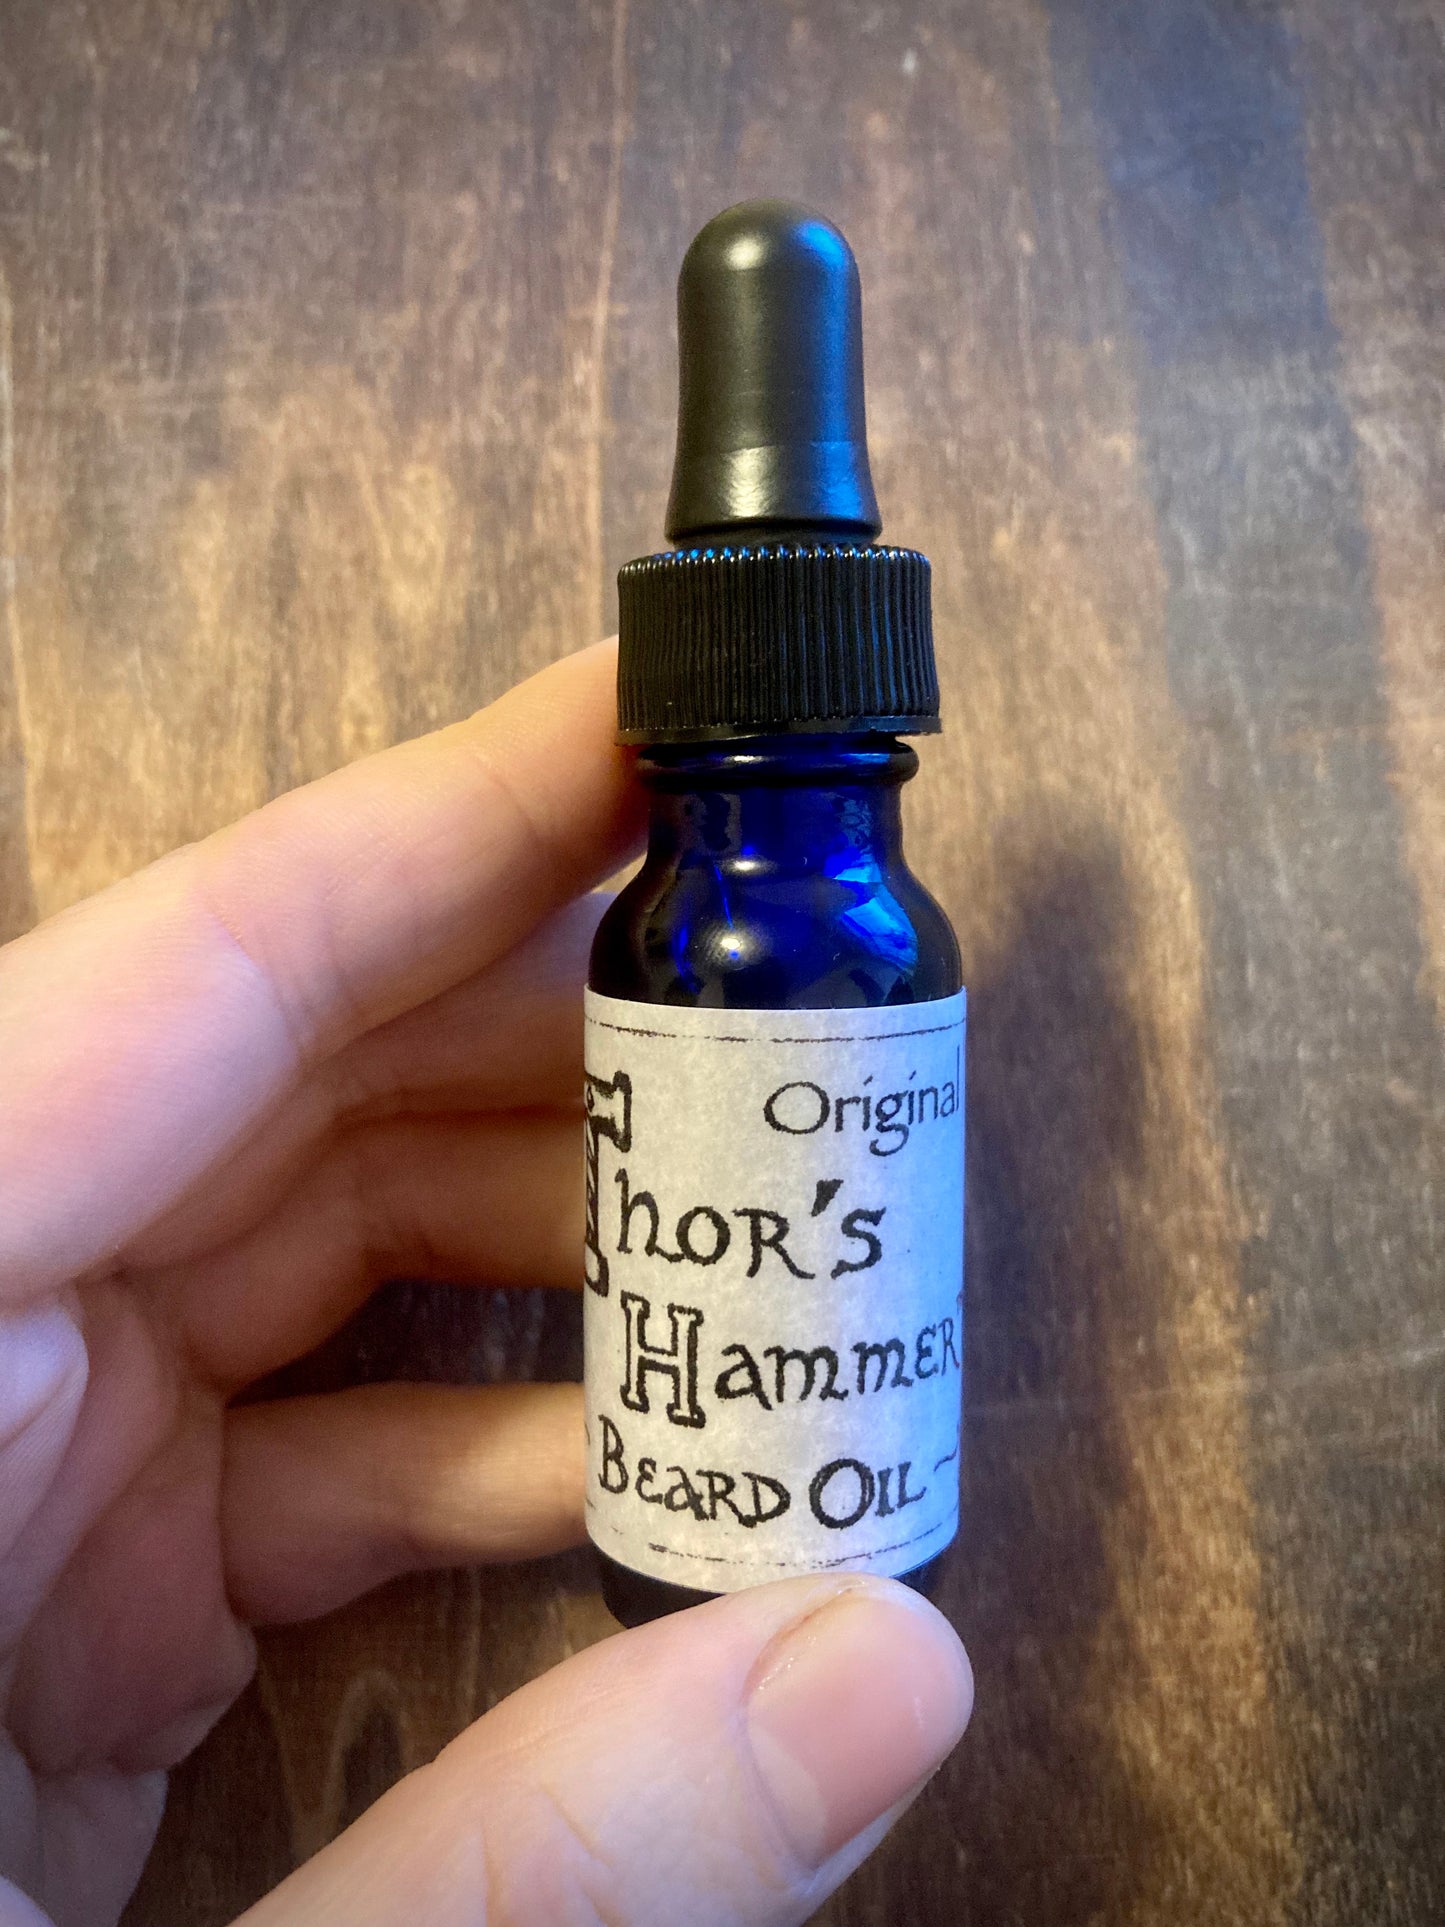 Thor's Hammer Beard Oil | Original Scent | Modern Viking All Natural "Axe" Beard Oil, Fresh, Smooth, Sweet, Spicy, Resinous